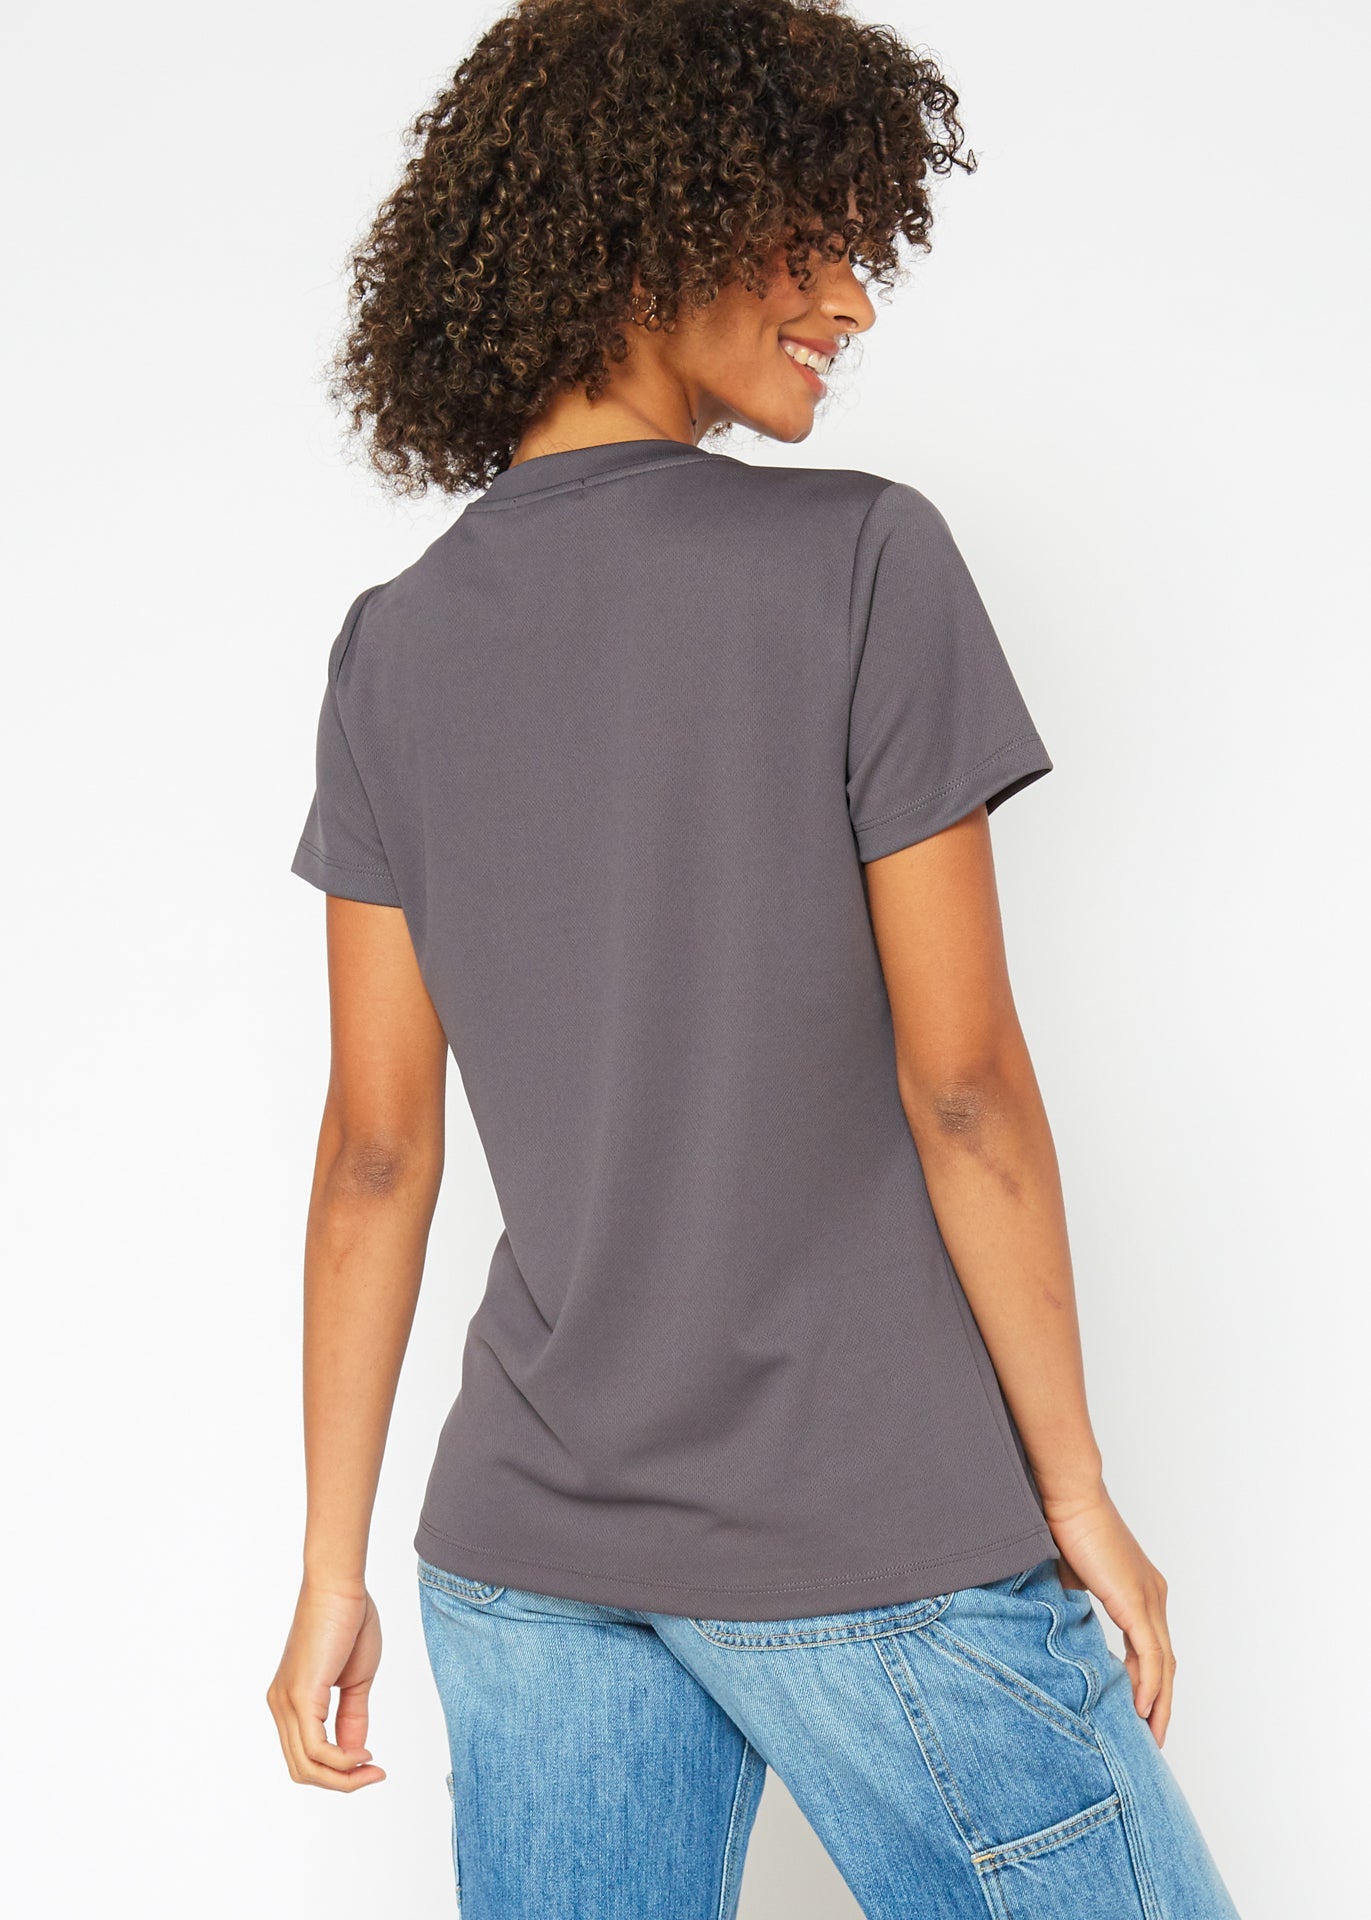 Women's Eco Friendly Reolite Tech T-shirt in Grey by Shop at Konus